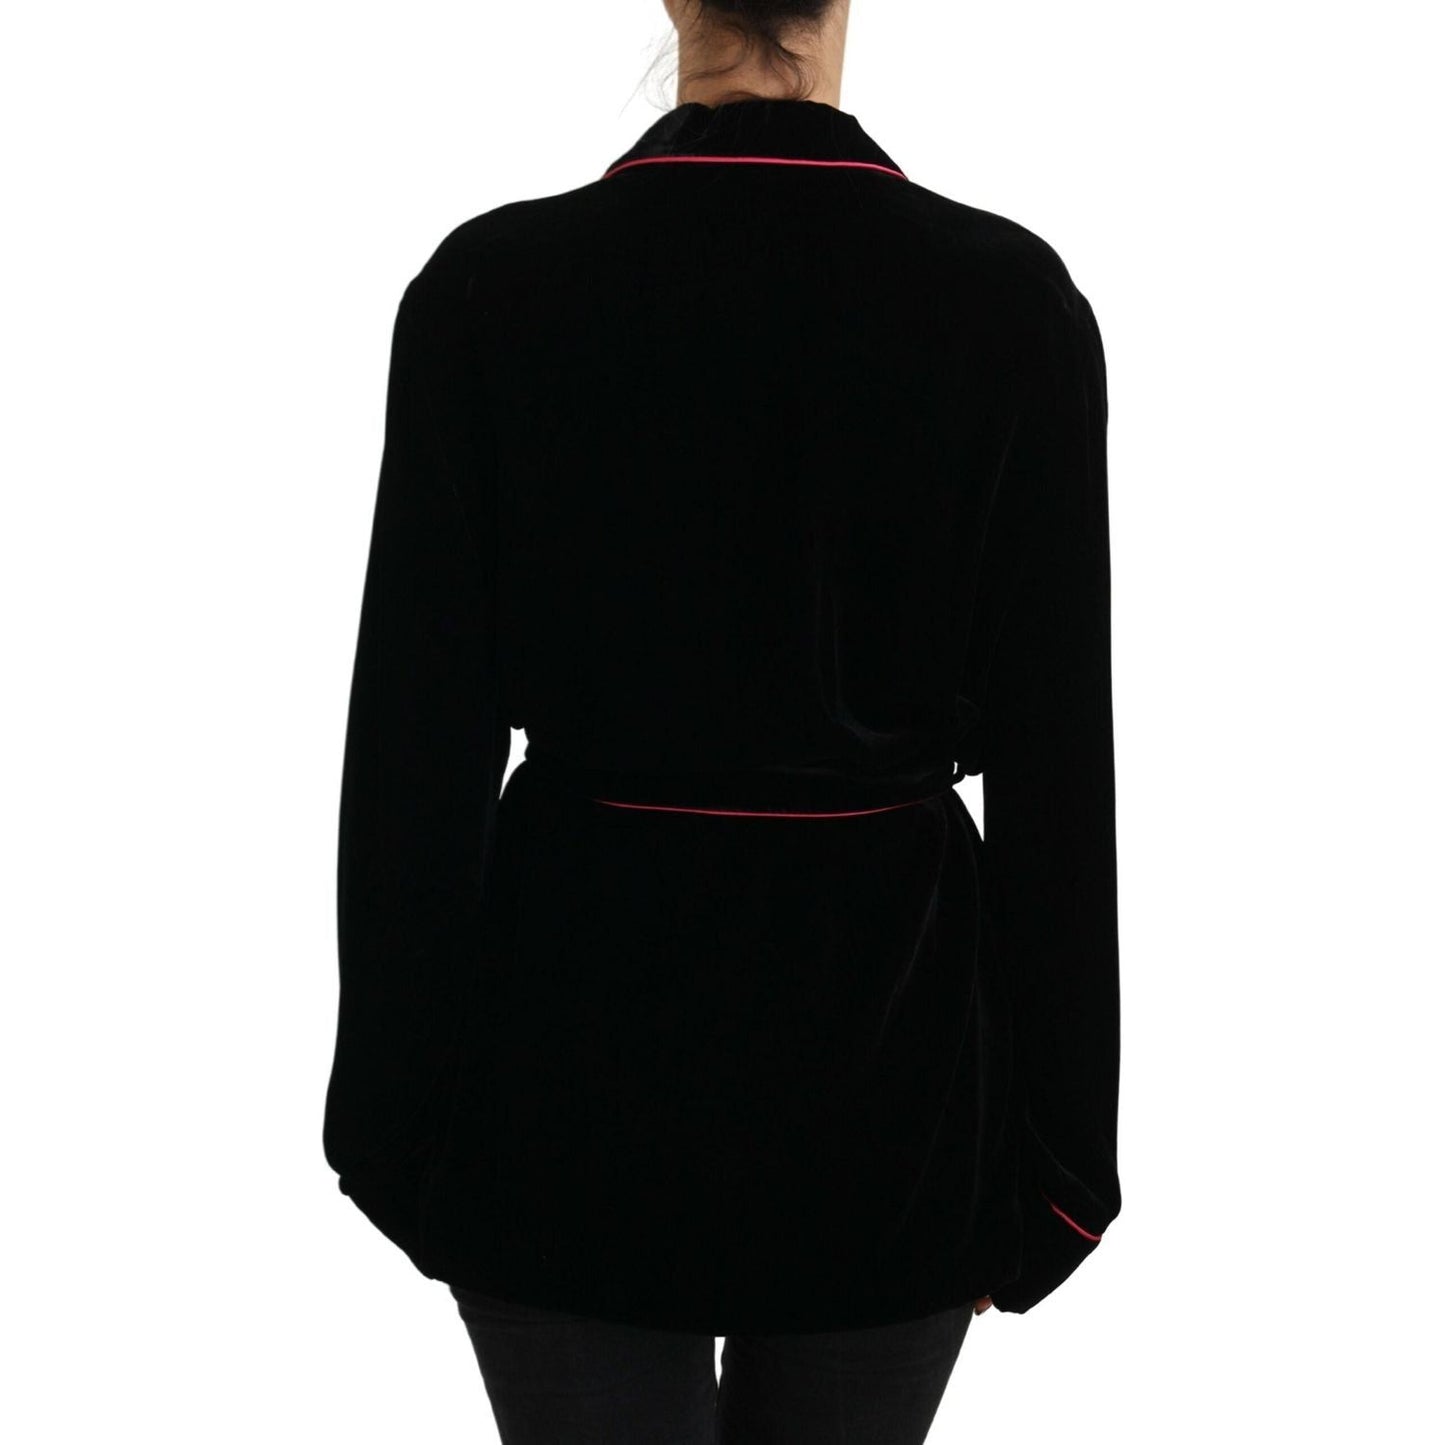 Dolce & Gabbana Elegant Black Silk-Blend Jacket with Waist Belt black-button-belted-blazer-viscose-jacket-1